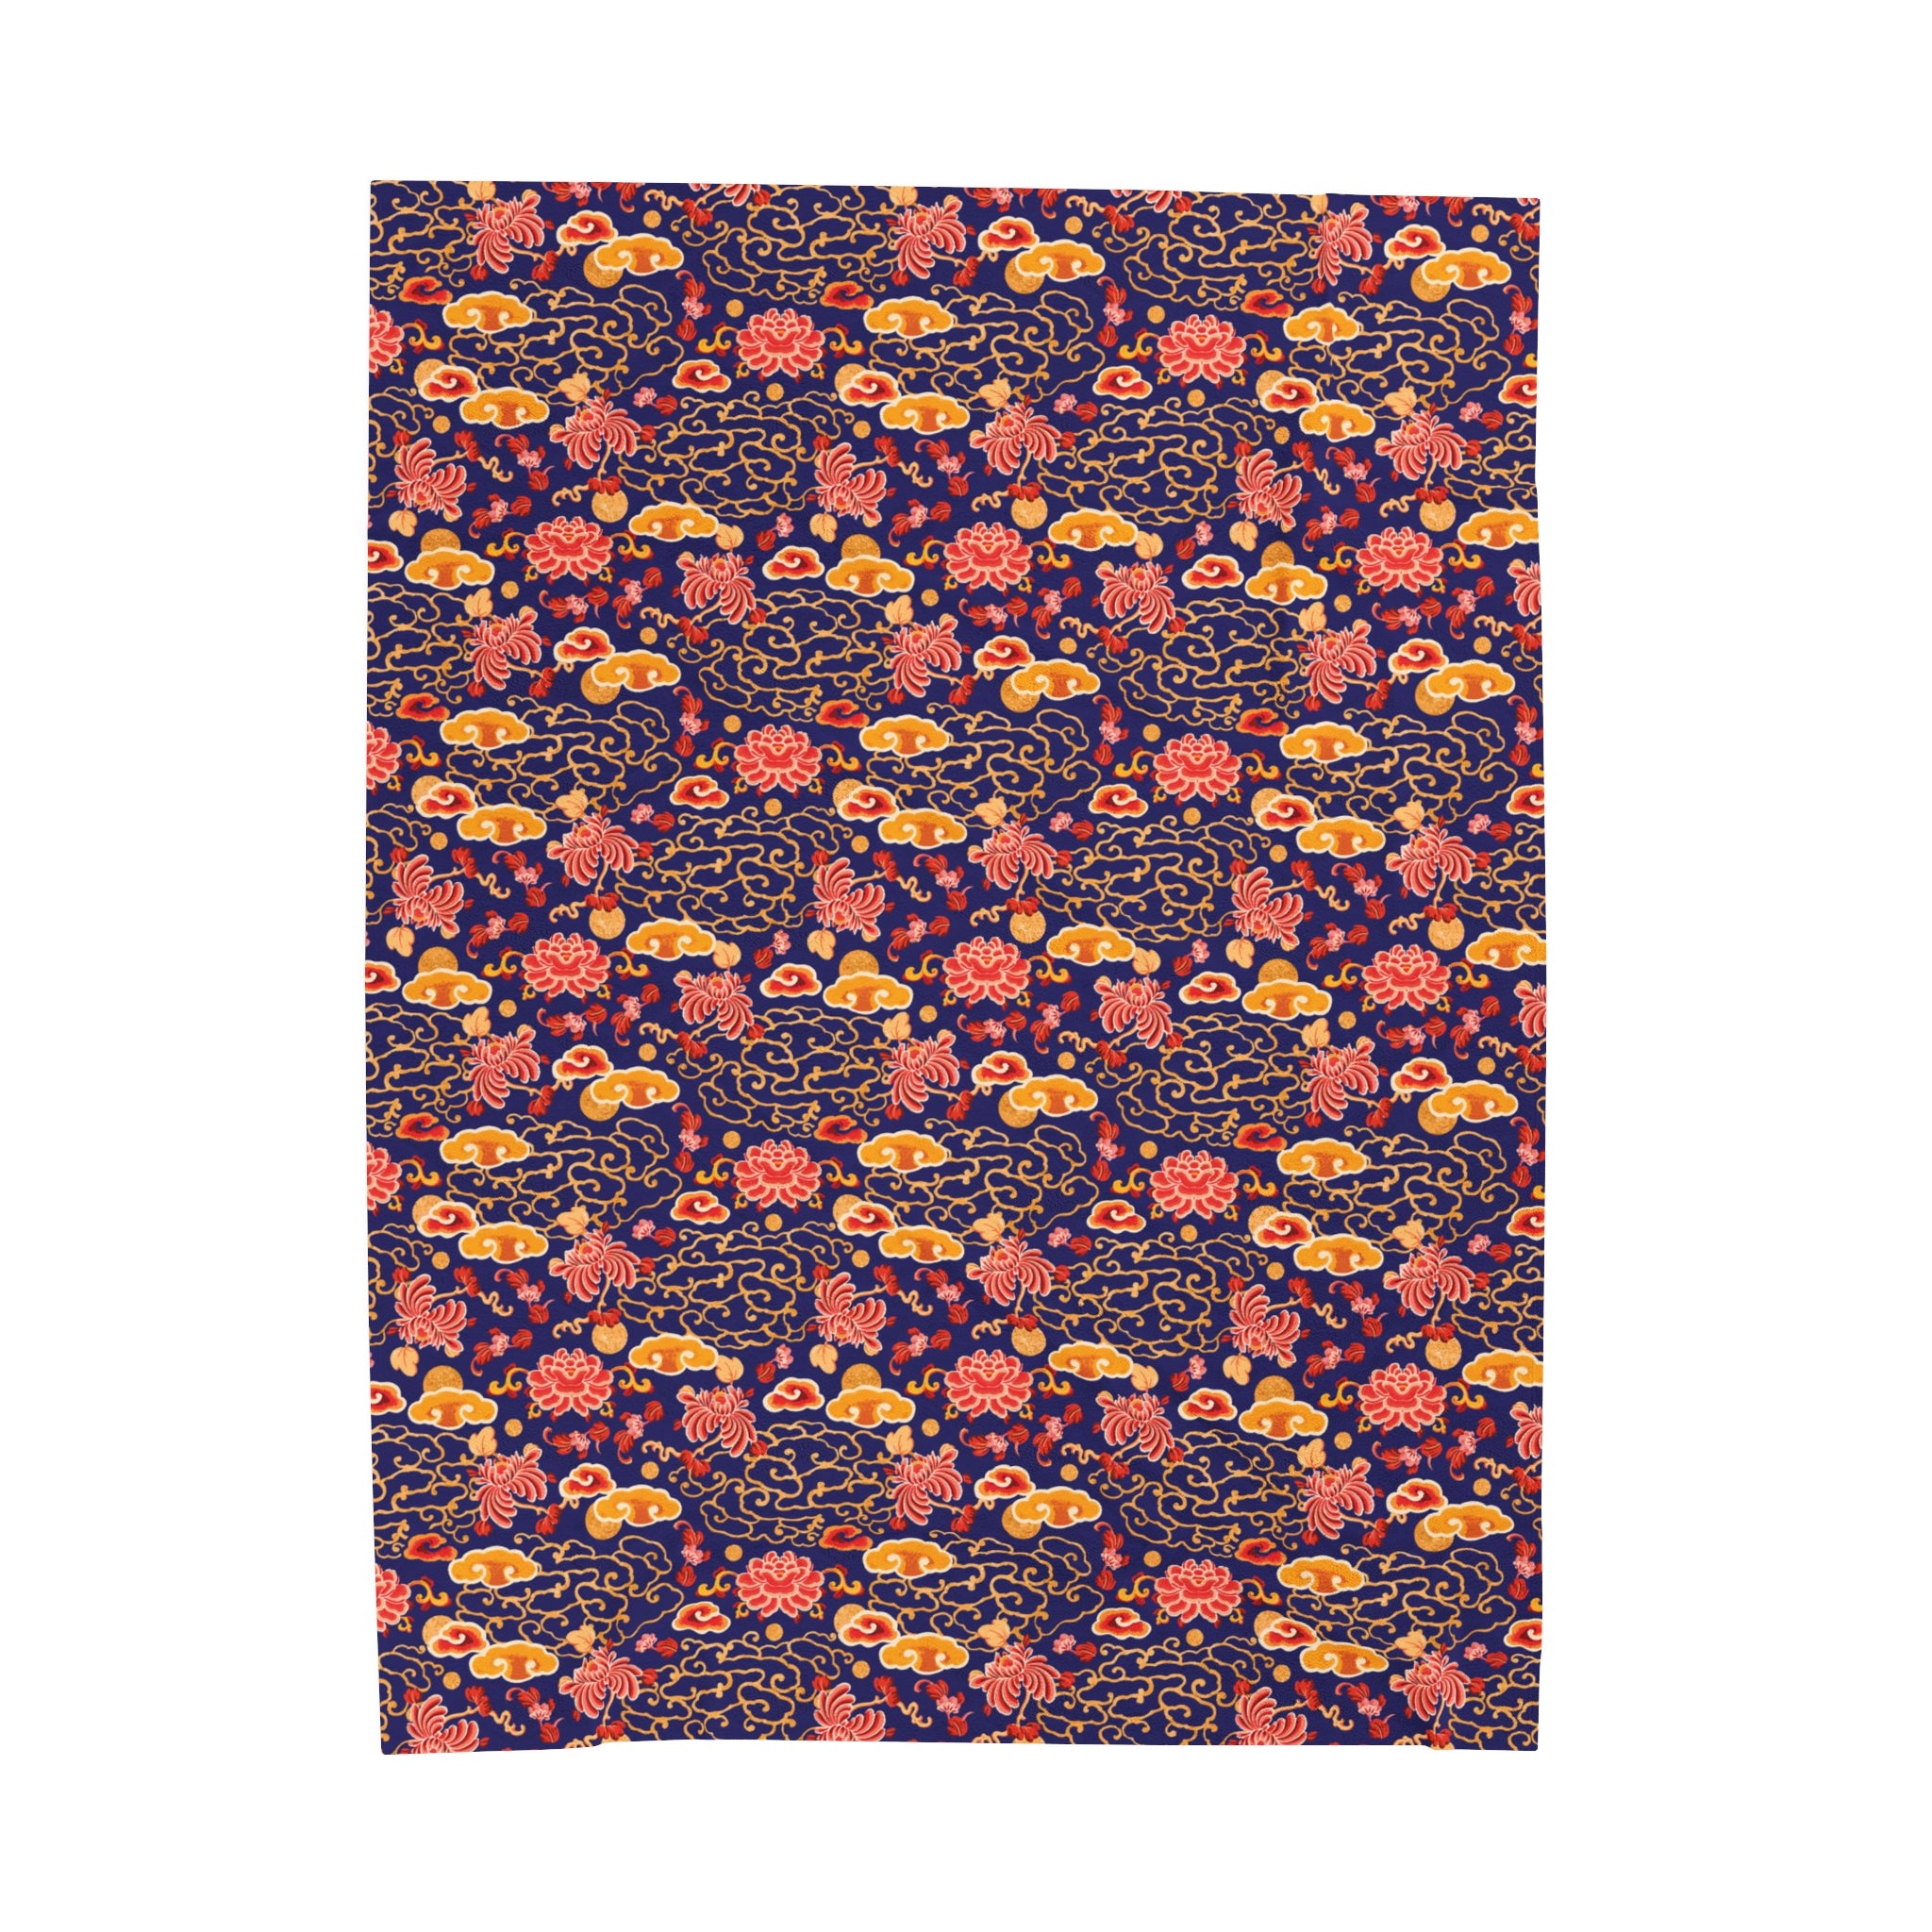 Floral Pattern Themed Soft Blanket